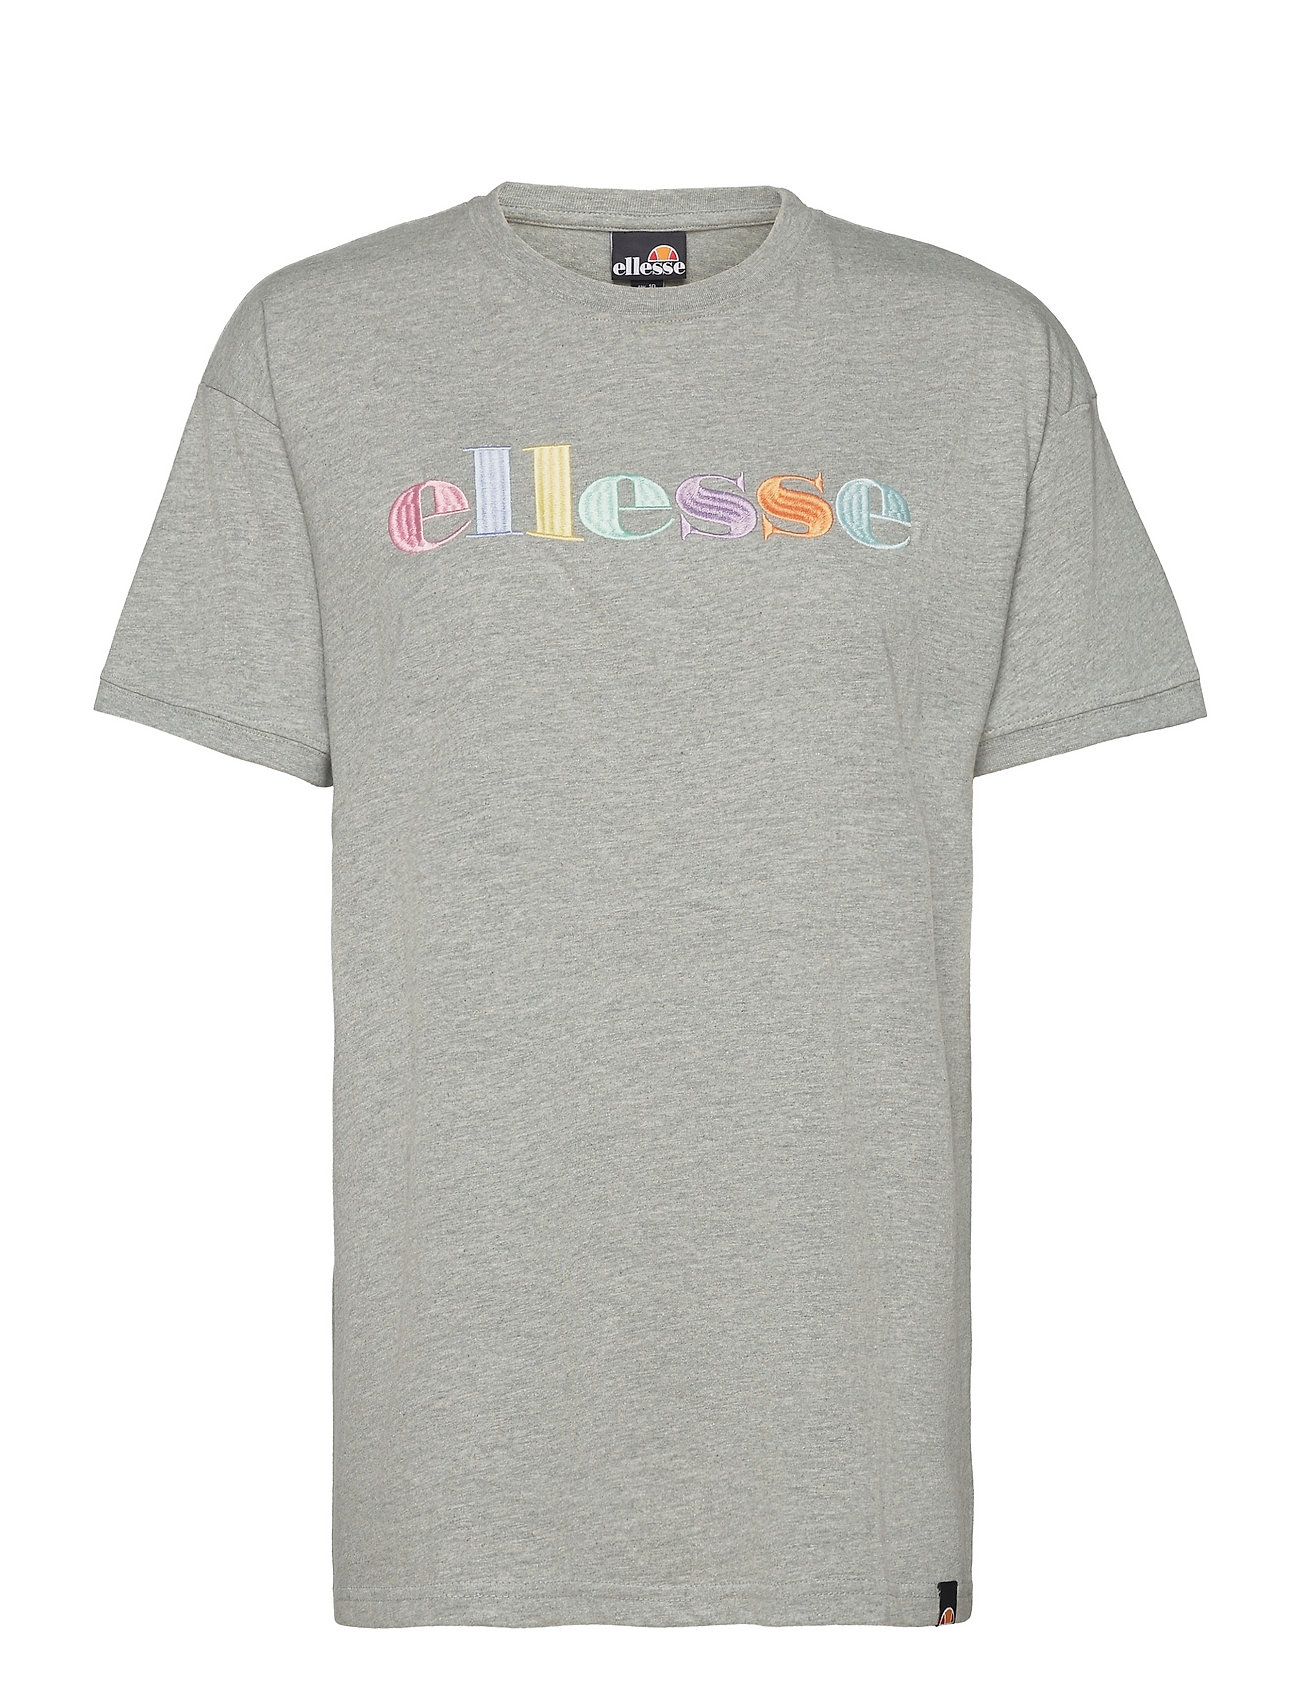 El Changling Tee T-shirts & Tops Short-sleeved Grå Ellesse